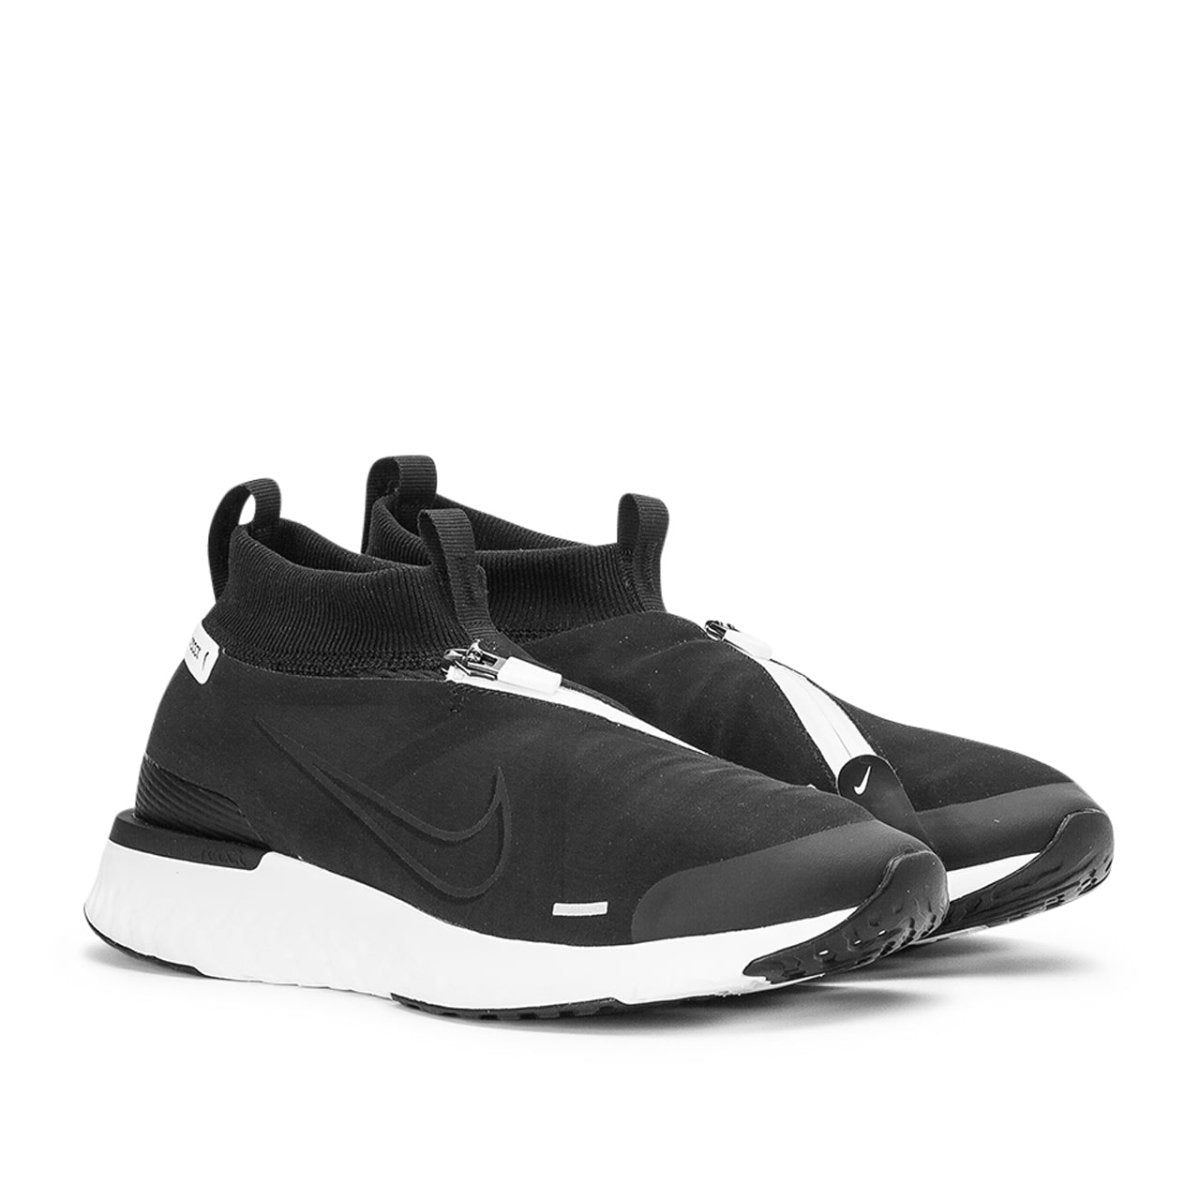 Nike React City (Black / White) AT8423 